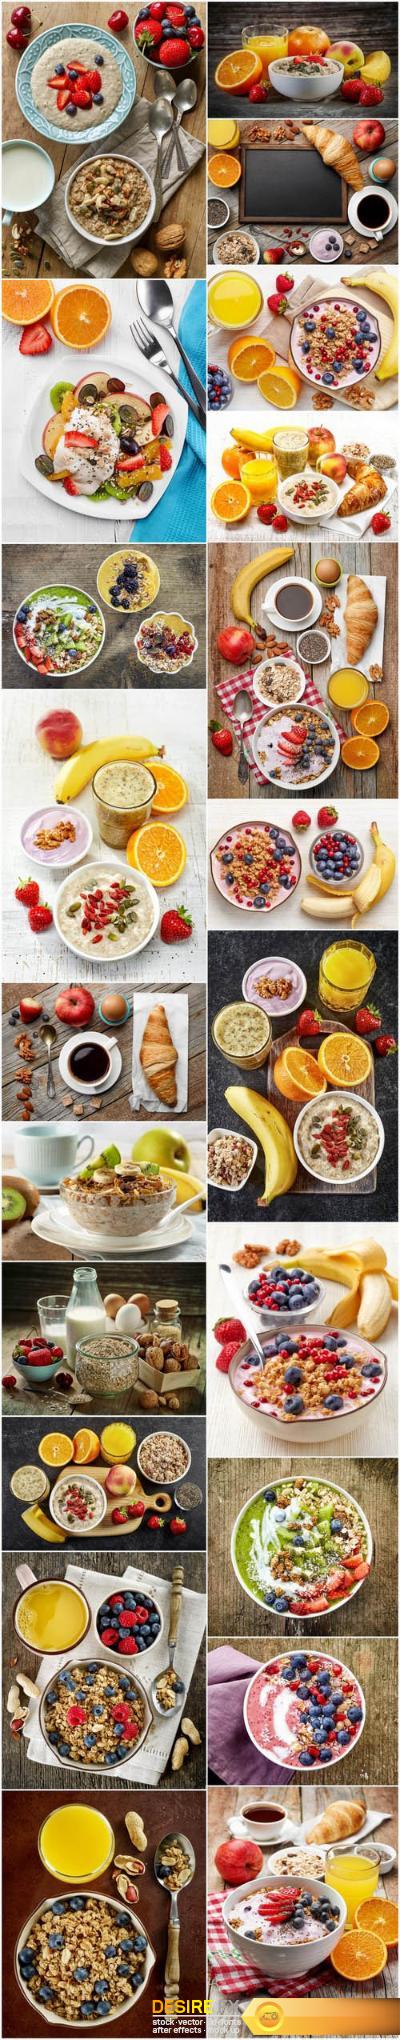 Healthy breakfast ingredients 2 – 21xUHQ JPEG